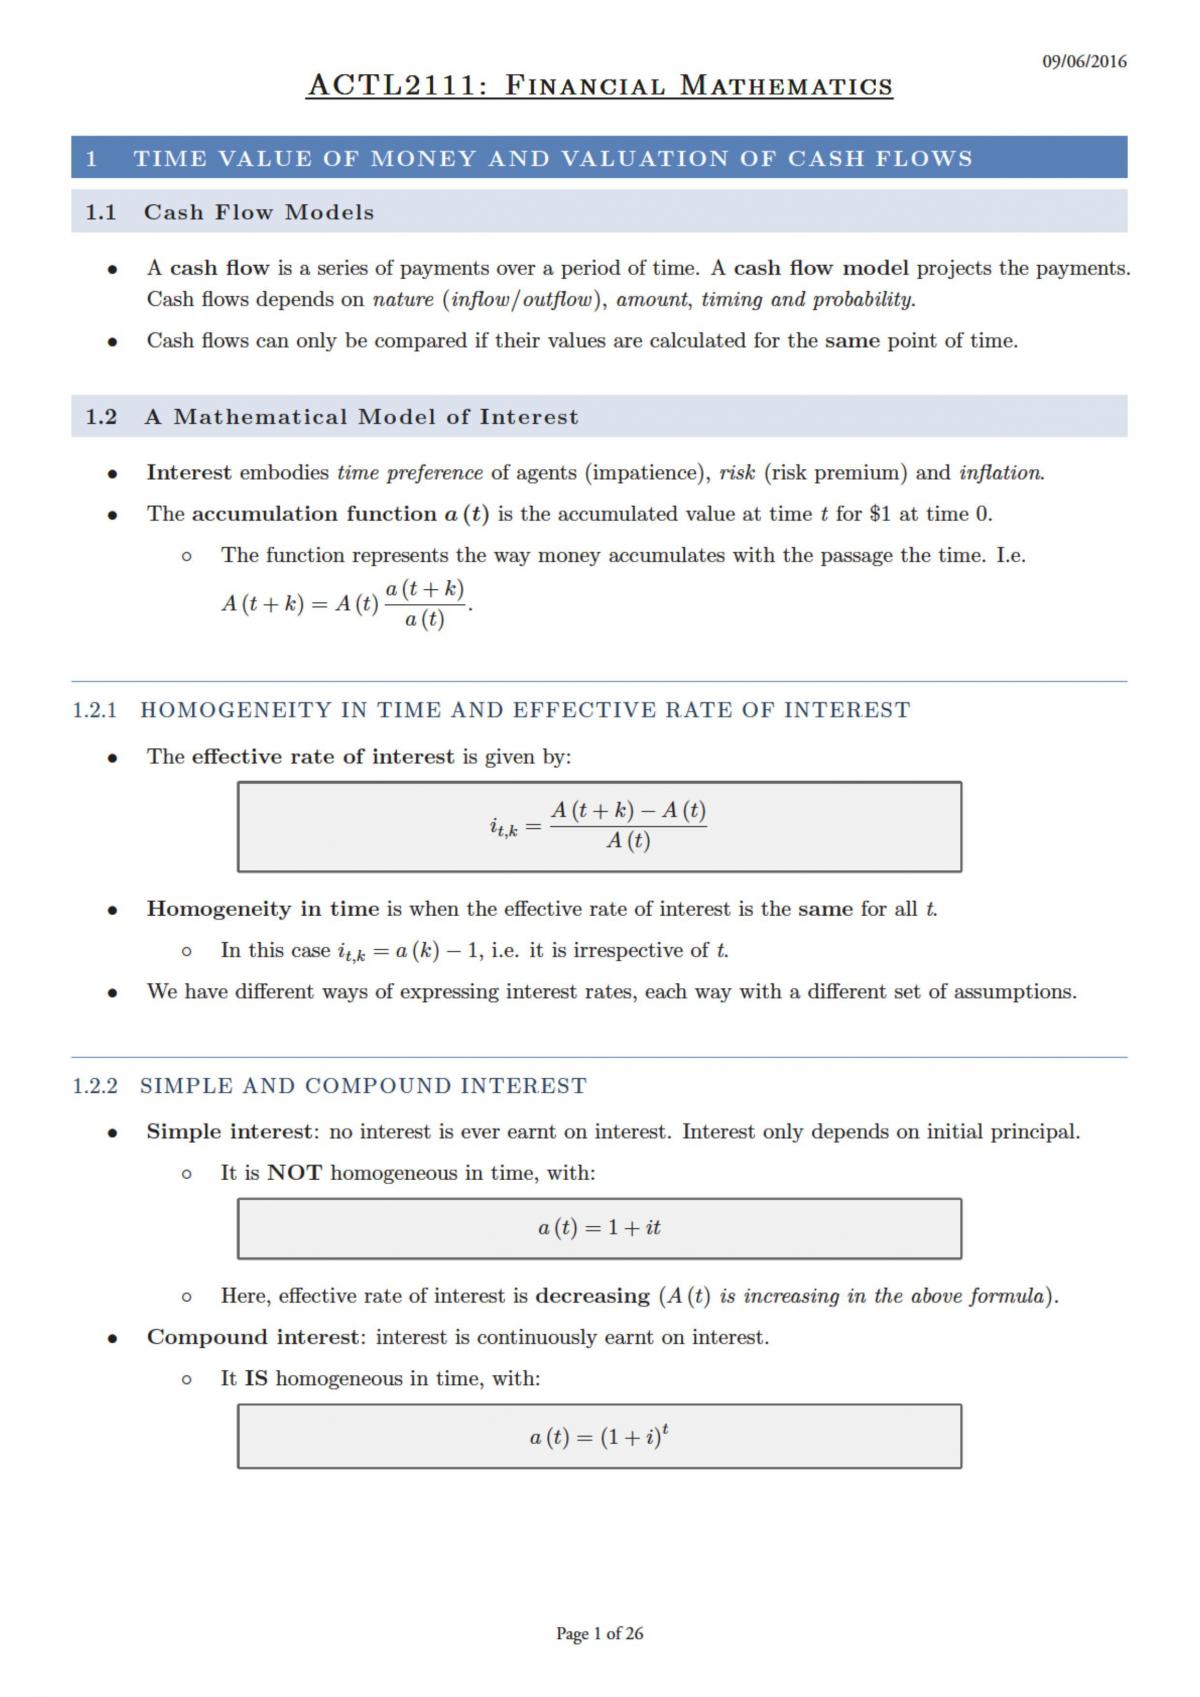 ACTL 2111 - Financial Mathematics - Page 1